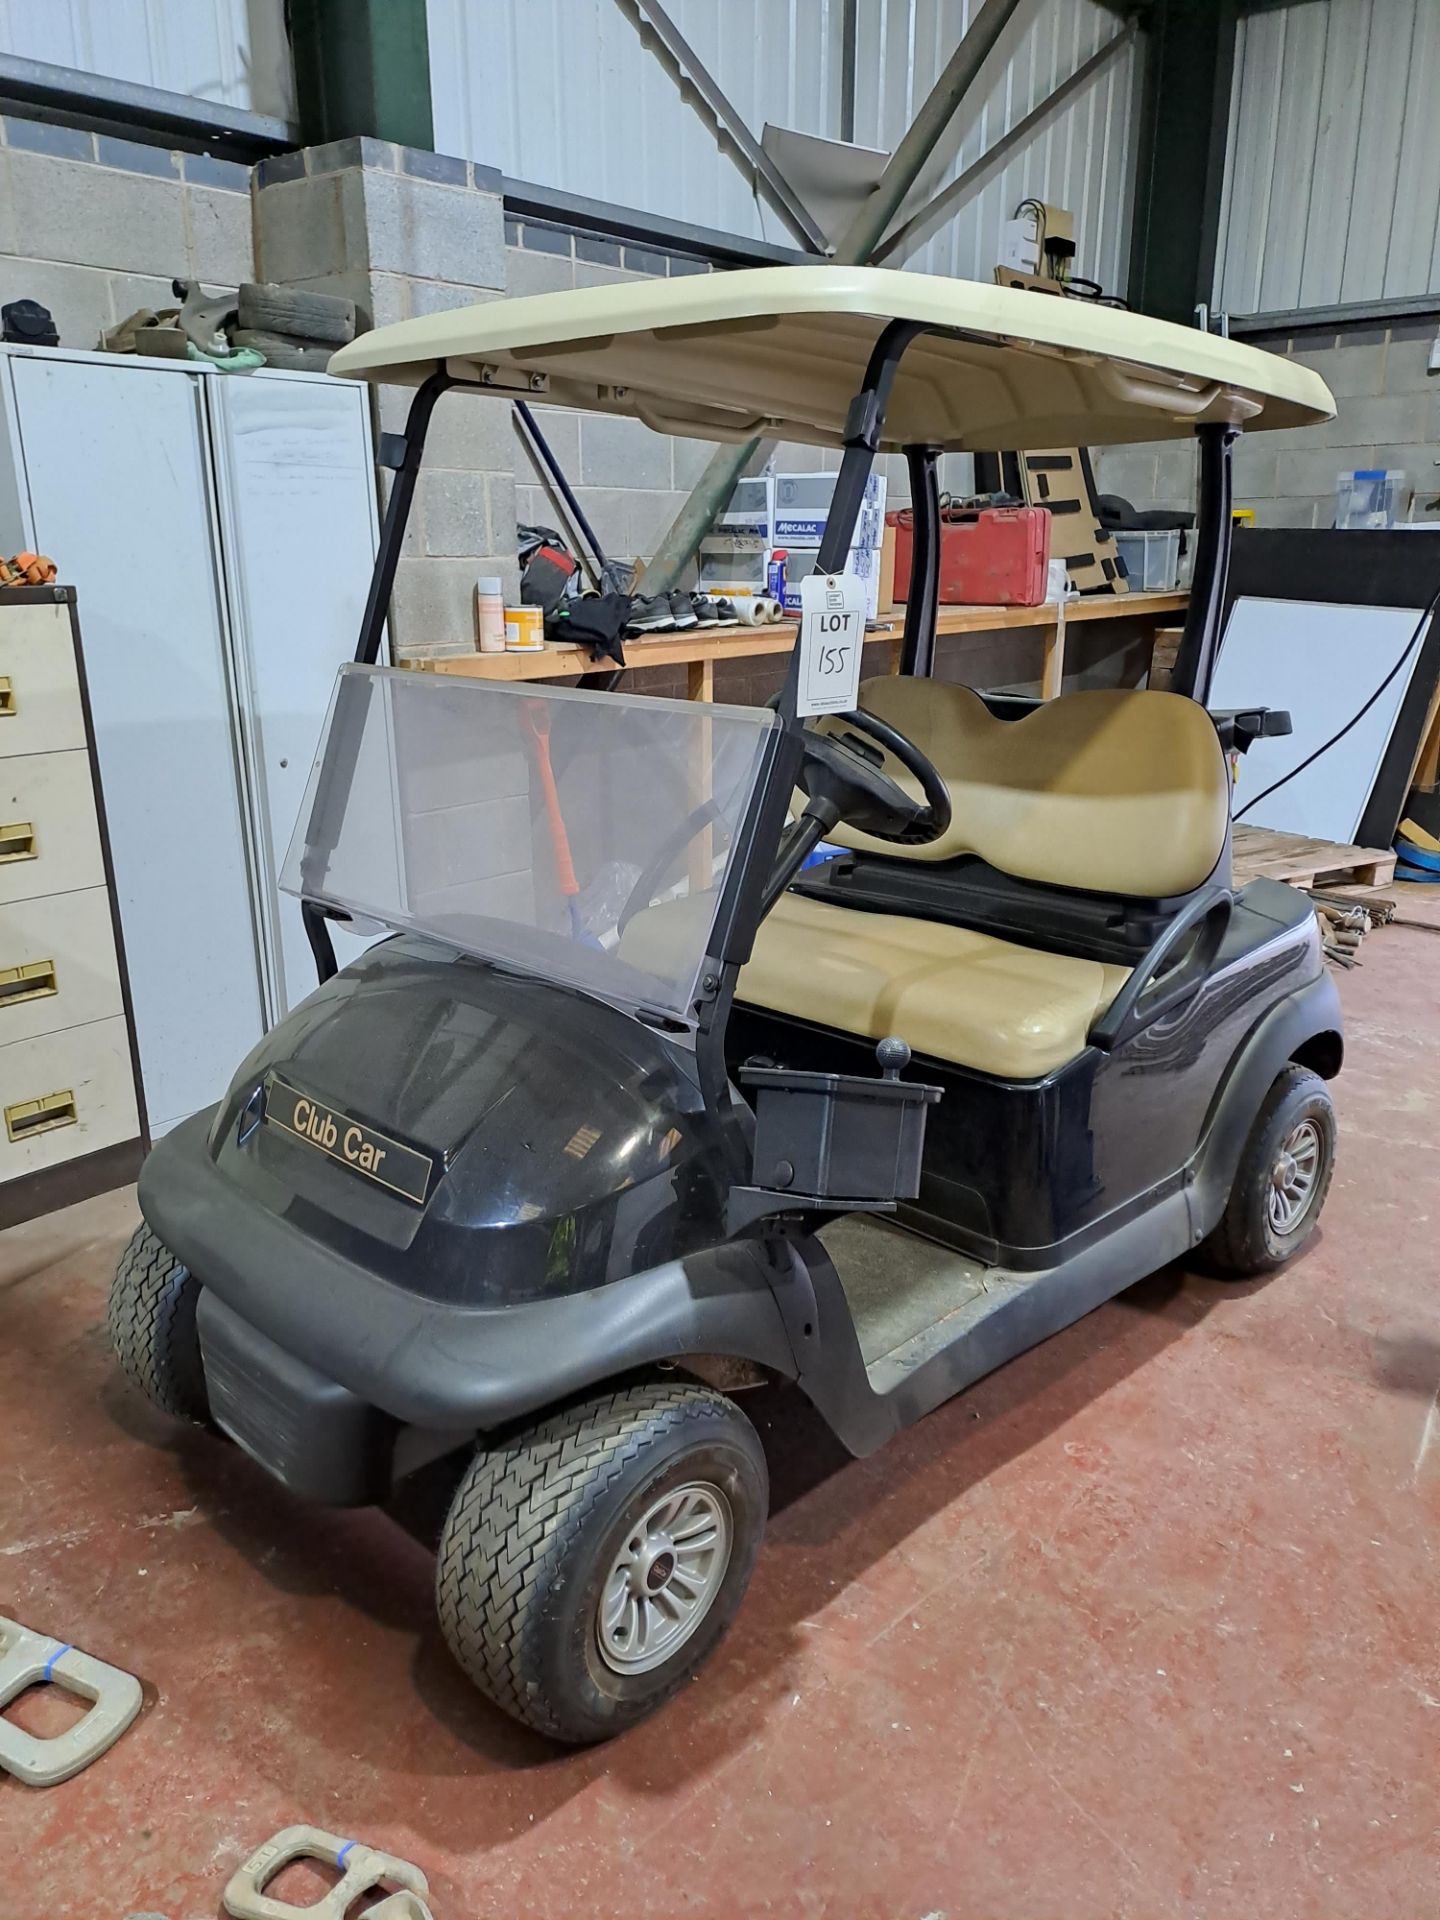 Club Car Precedent electric golf buggy, serial no. JE1722-727415